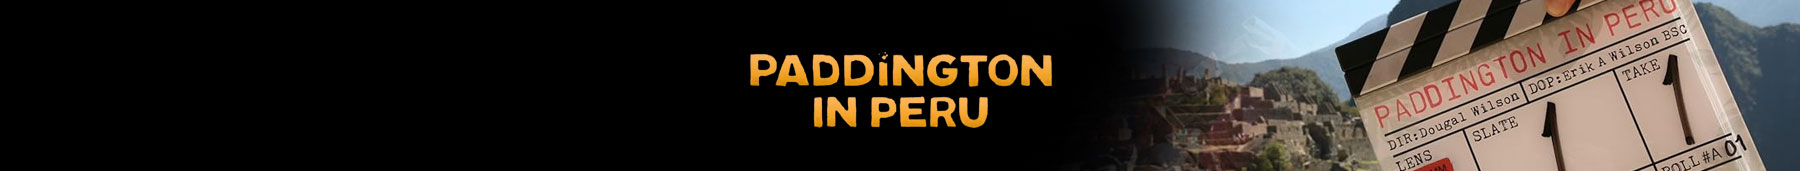 Paddington in Peru